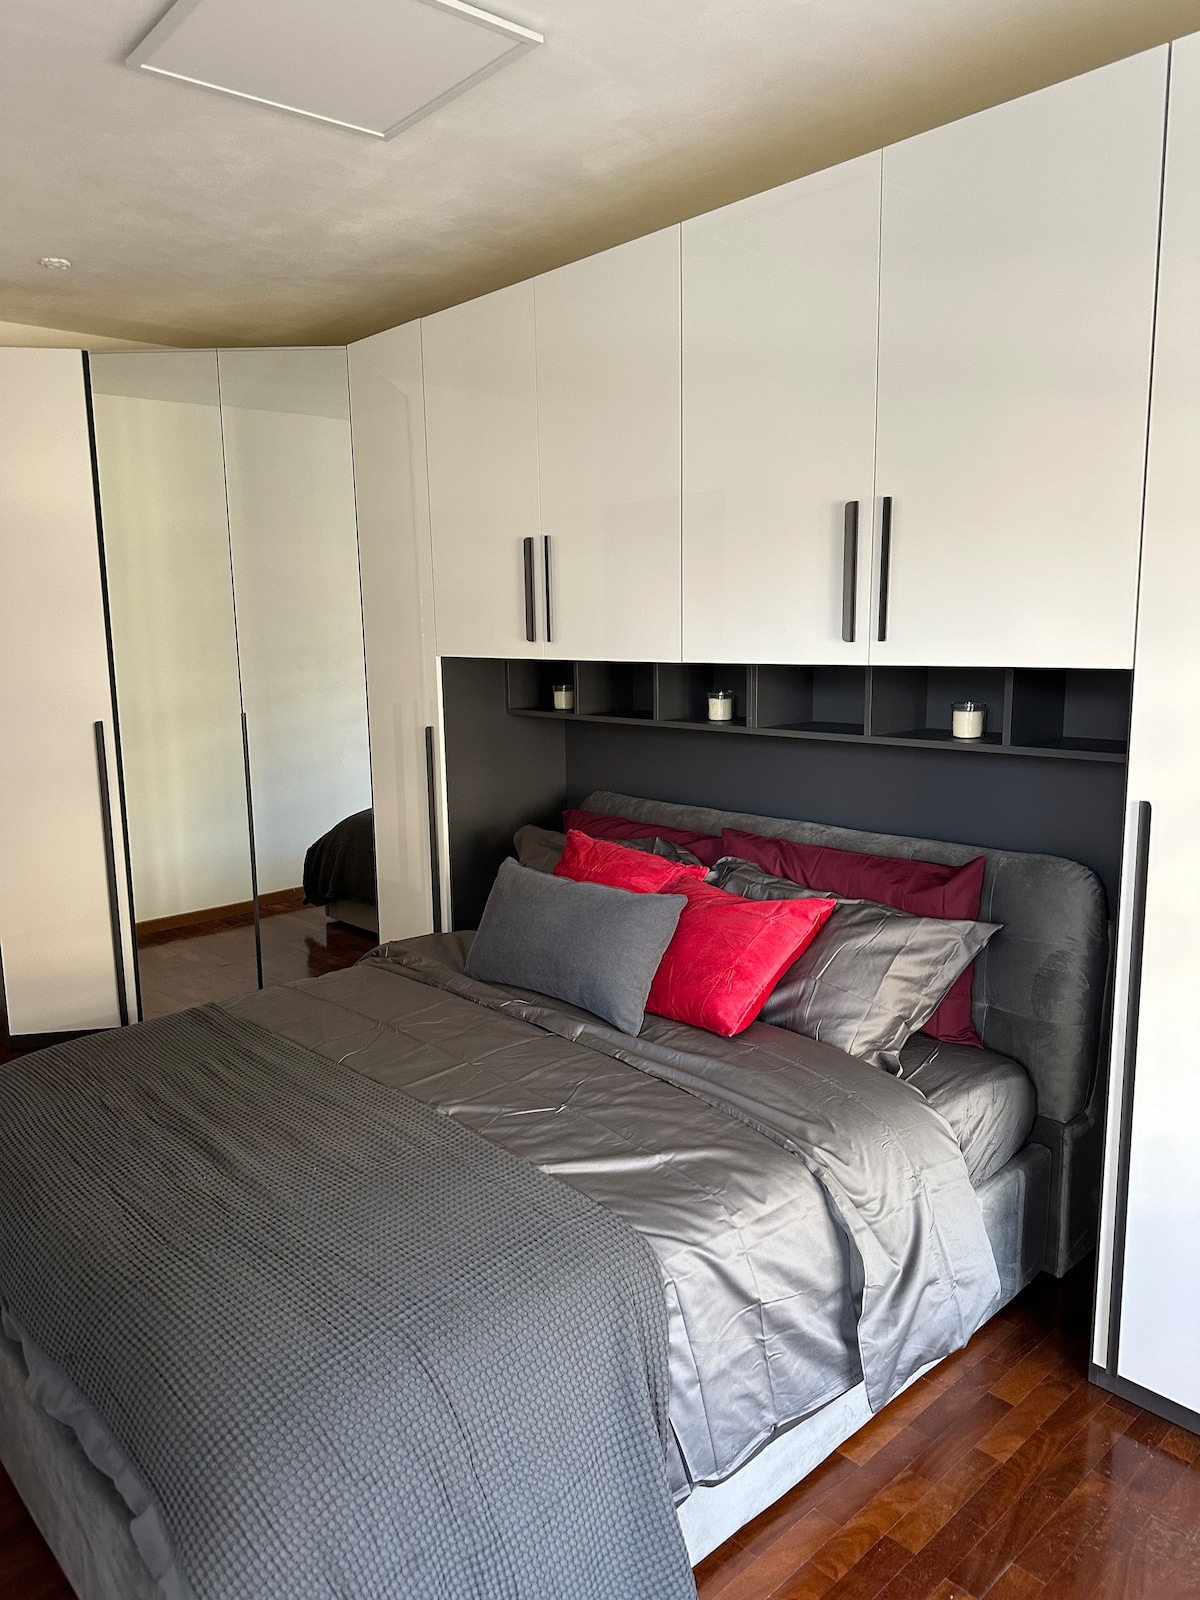 Cozy suite in pleasant settings